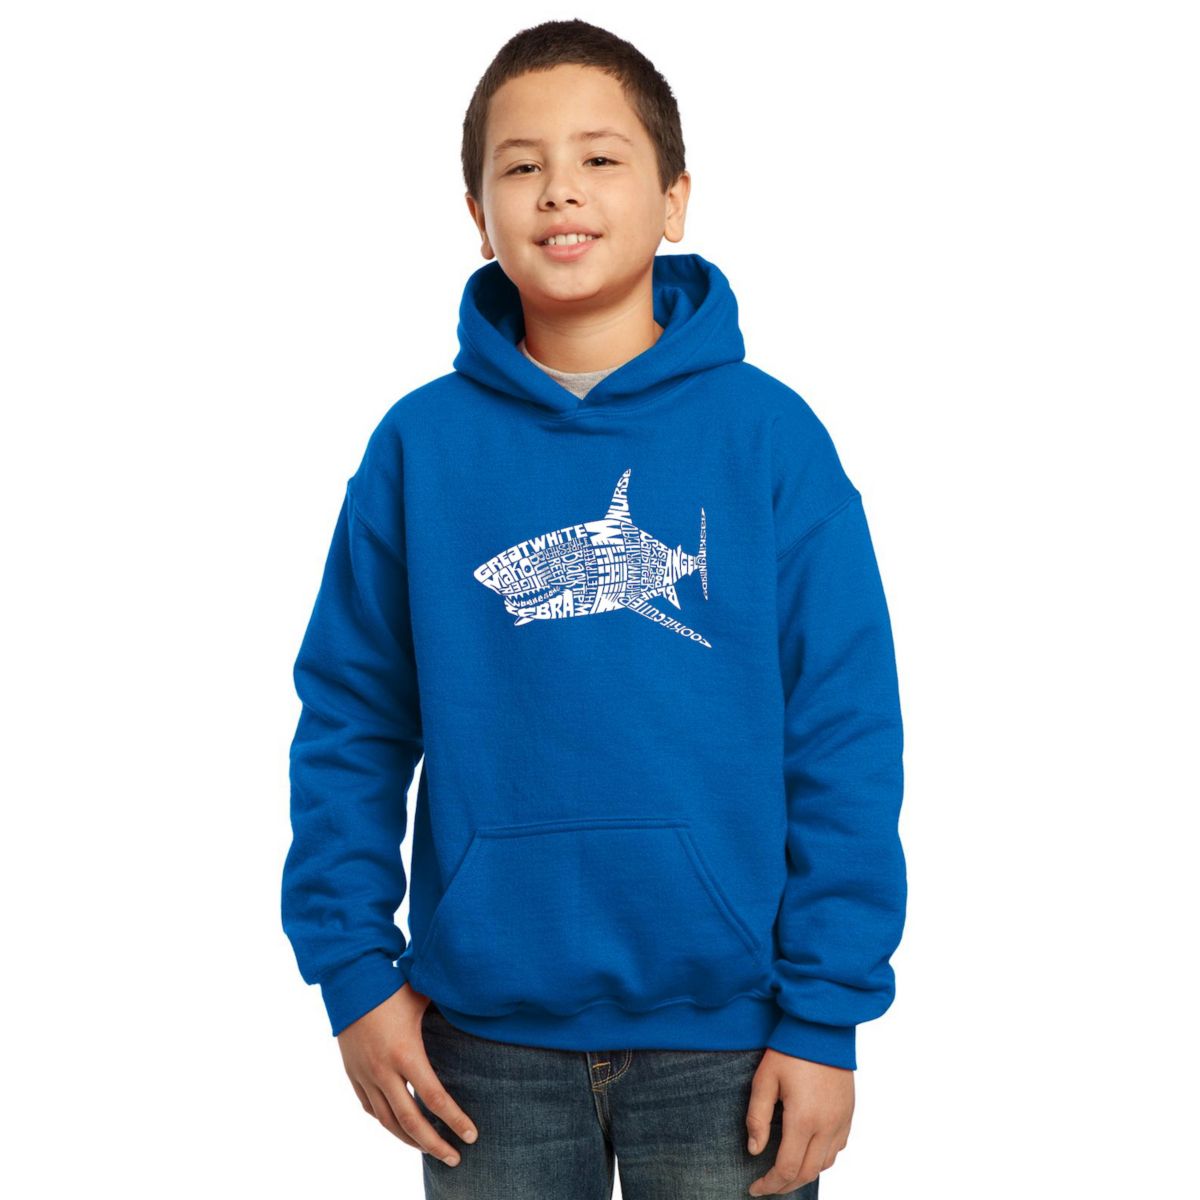 Species Of Shark - Boy's Word Art Hooded Sweatshirt LA Pop Art